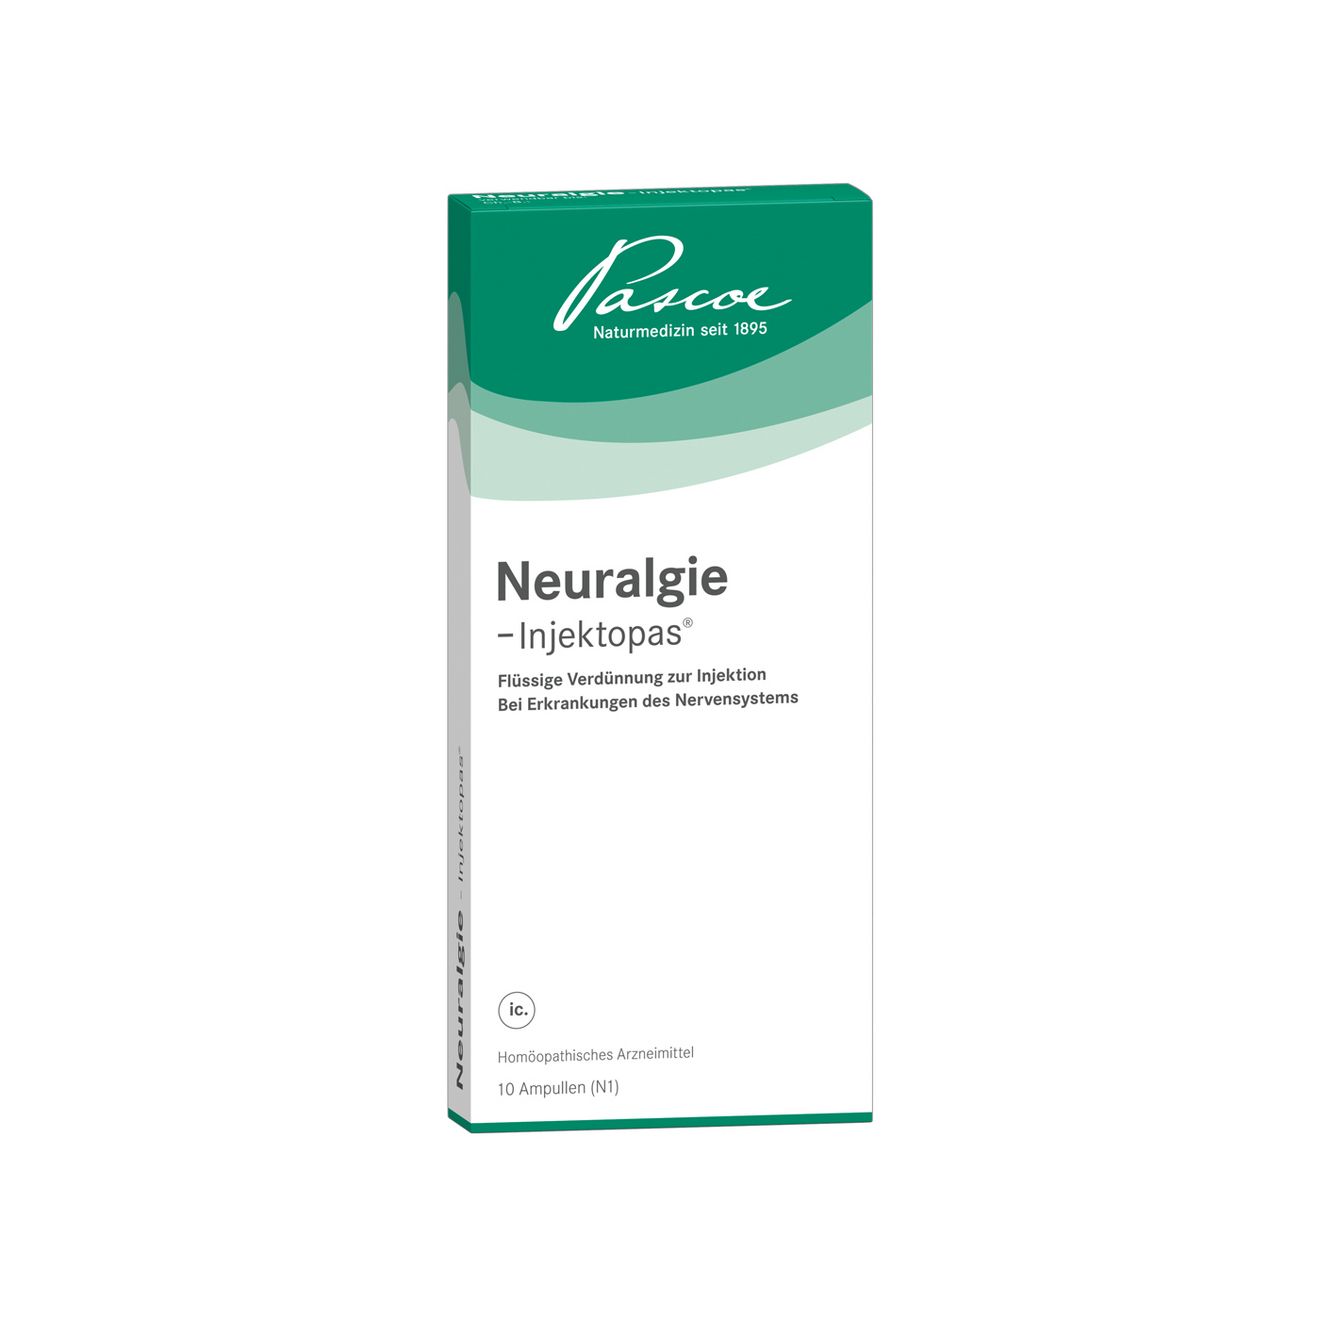 Neuralgie-Injektopas 10 x 2 ml Packshot PZN 11127867